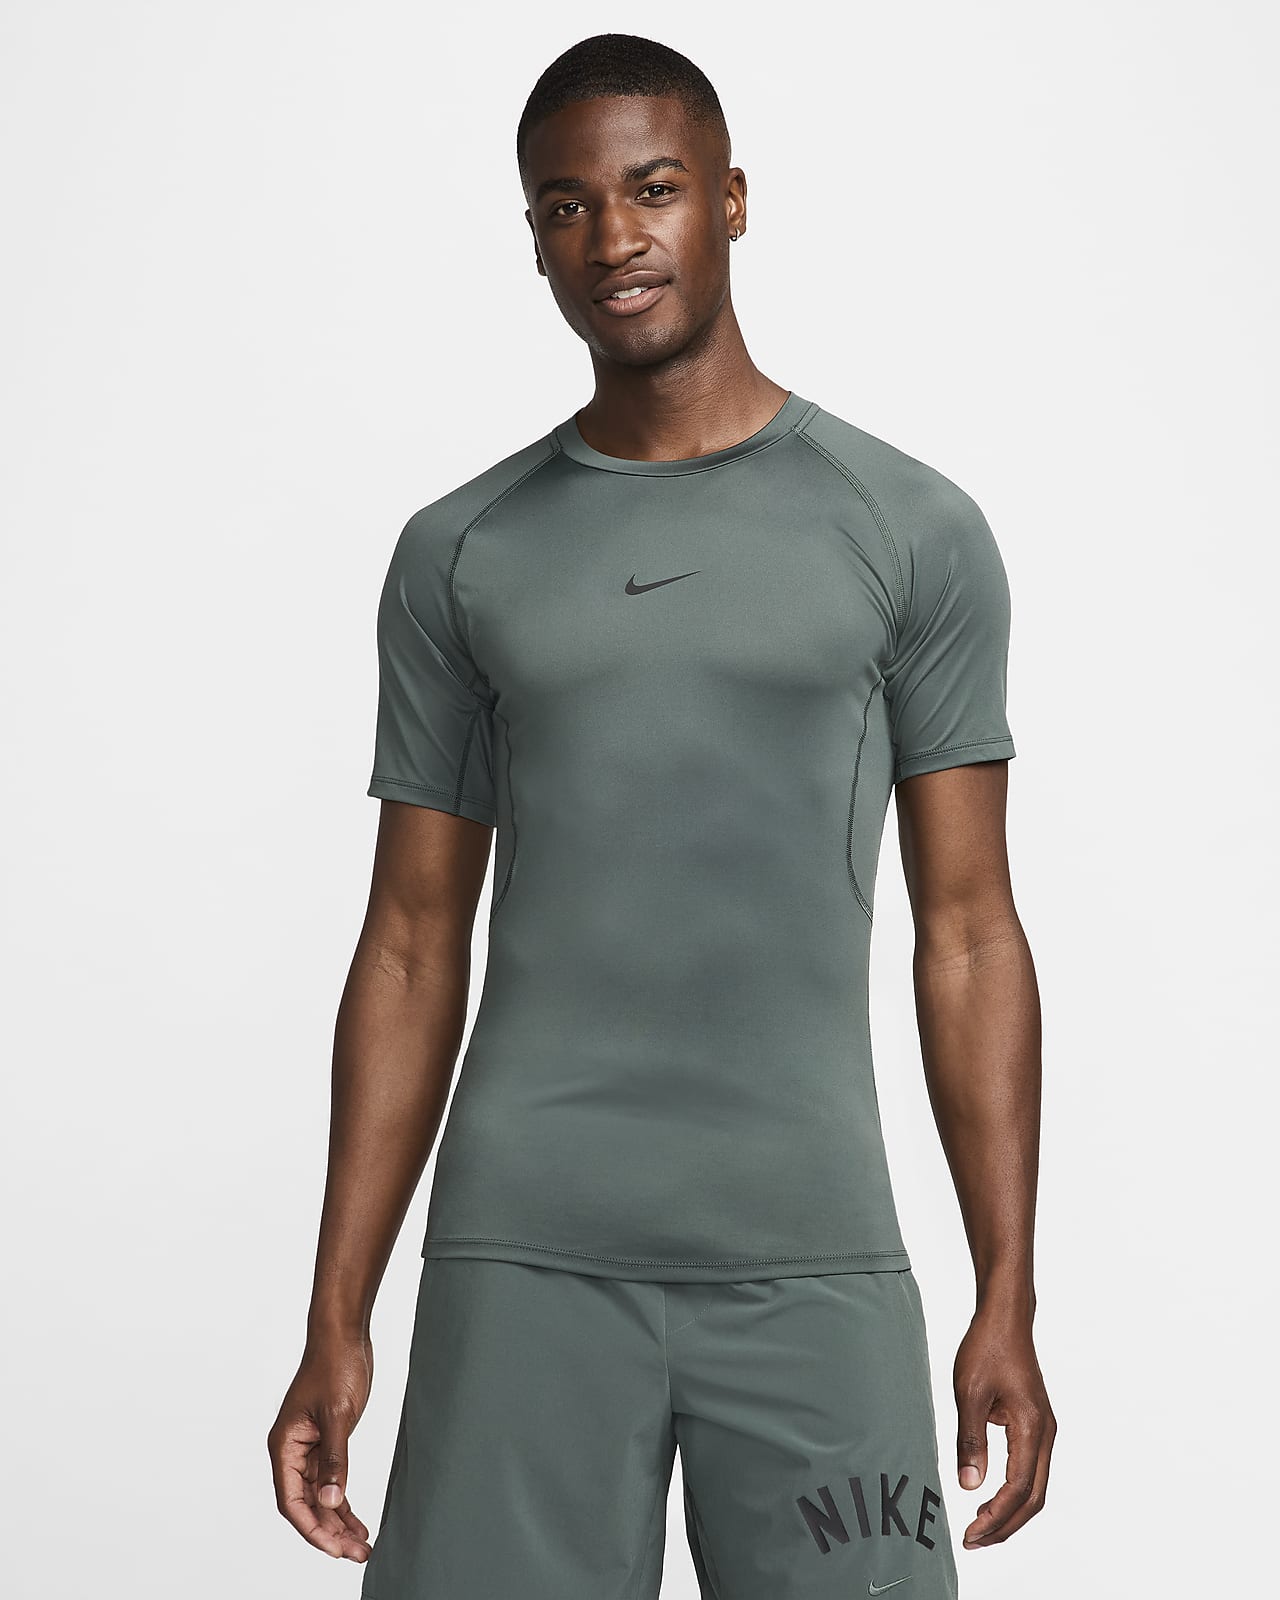 Nike Pro Men's Dri-FIT Tight Short-Sleeve Fitness Top